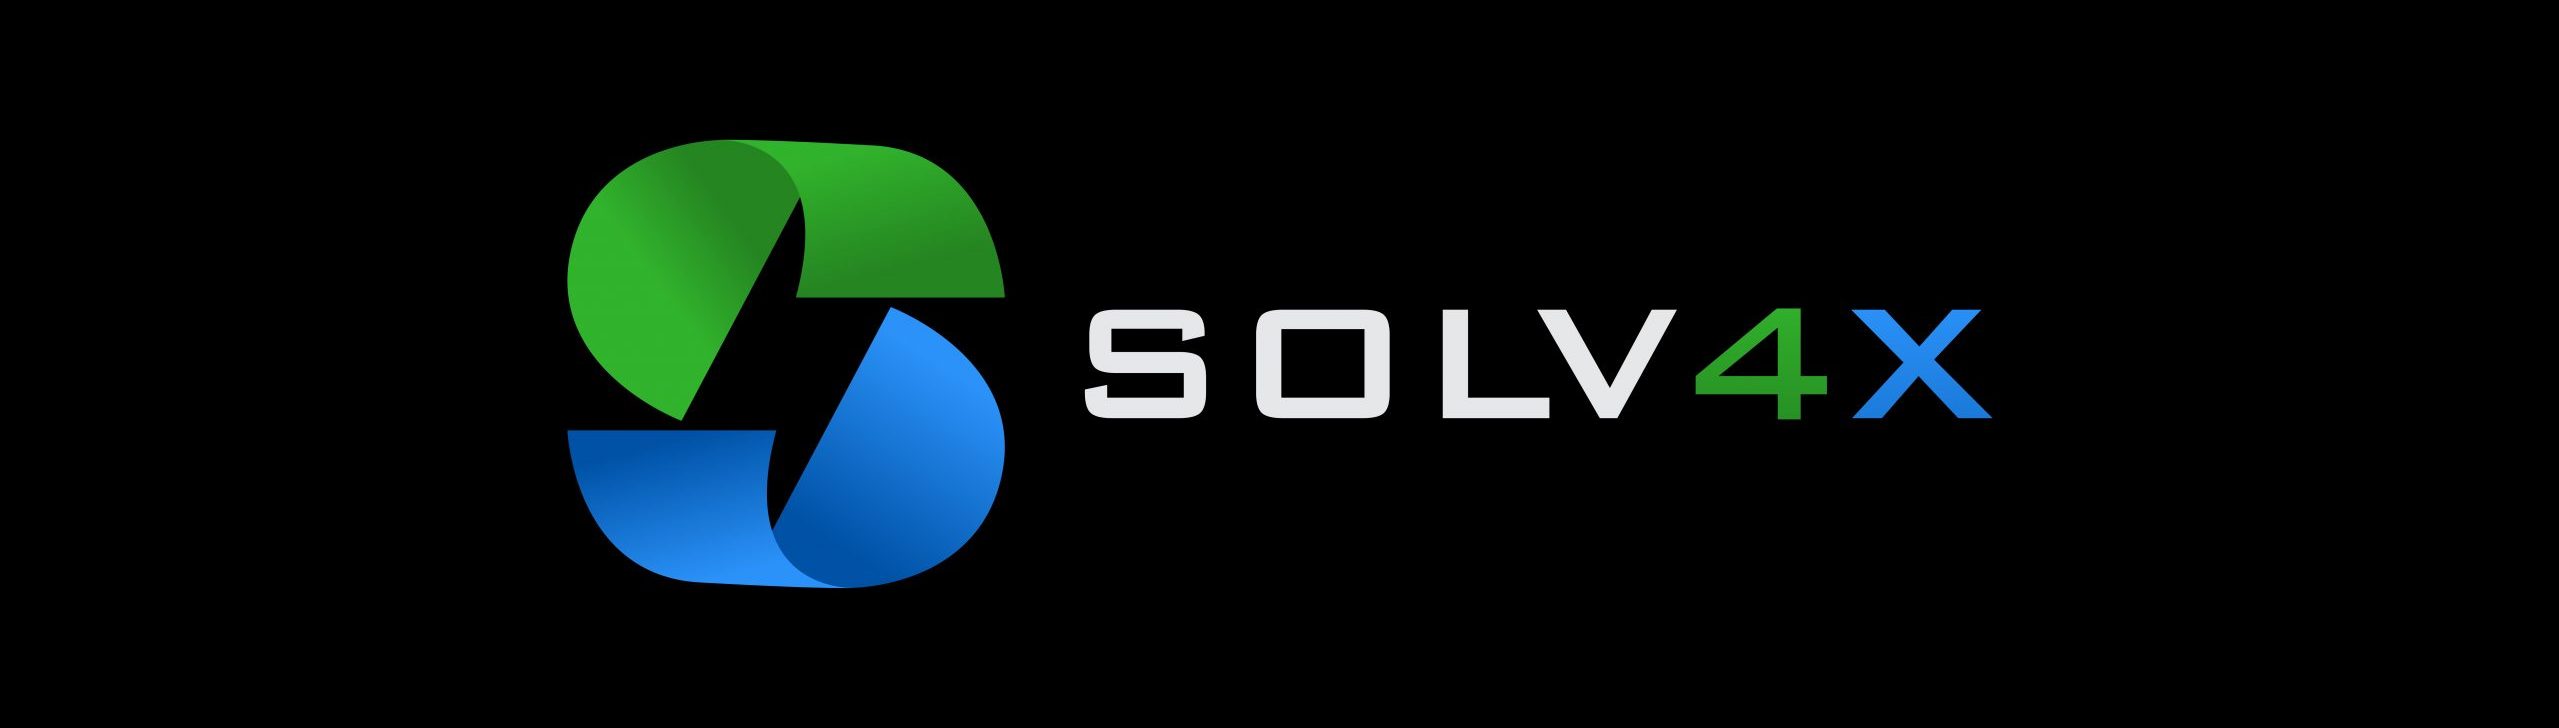 Solv4x